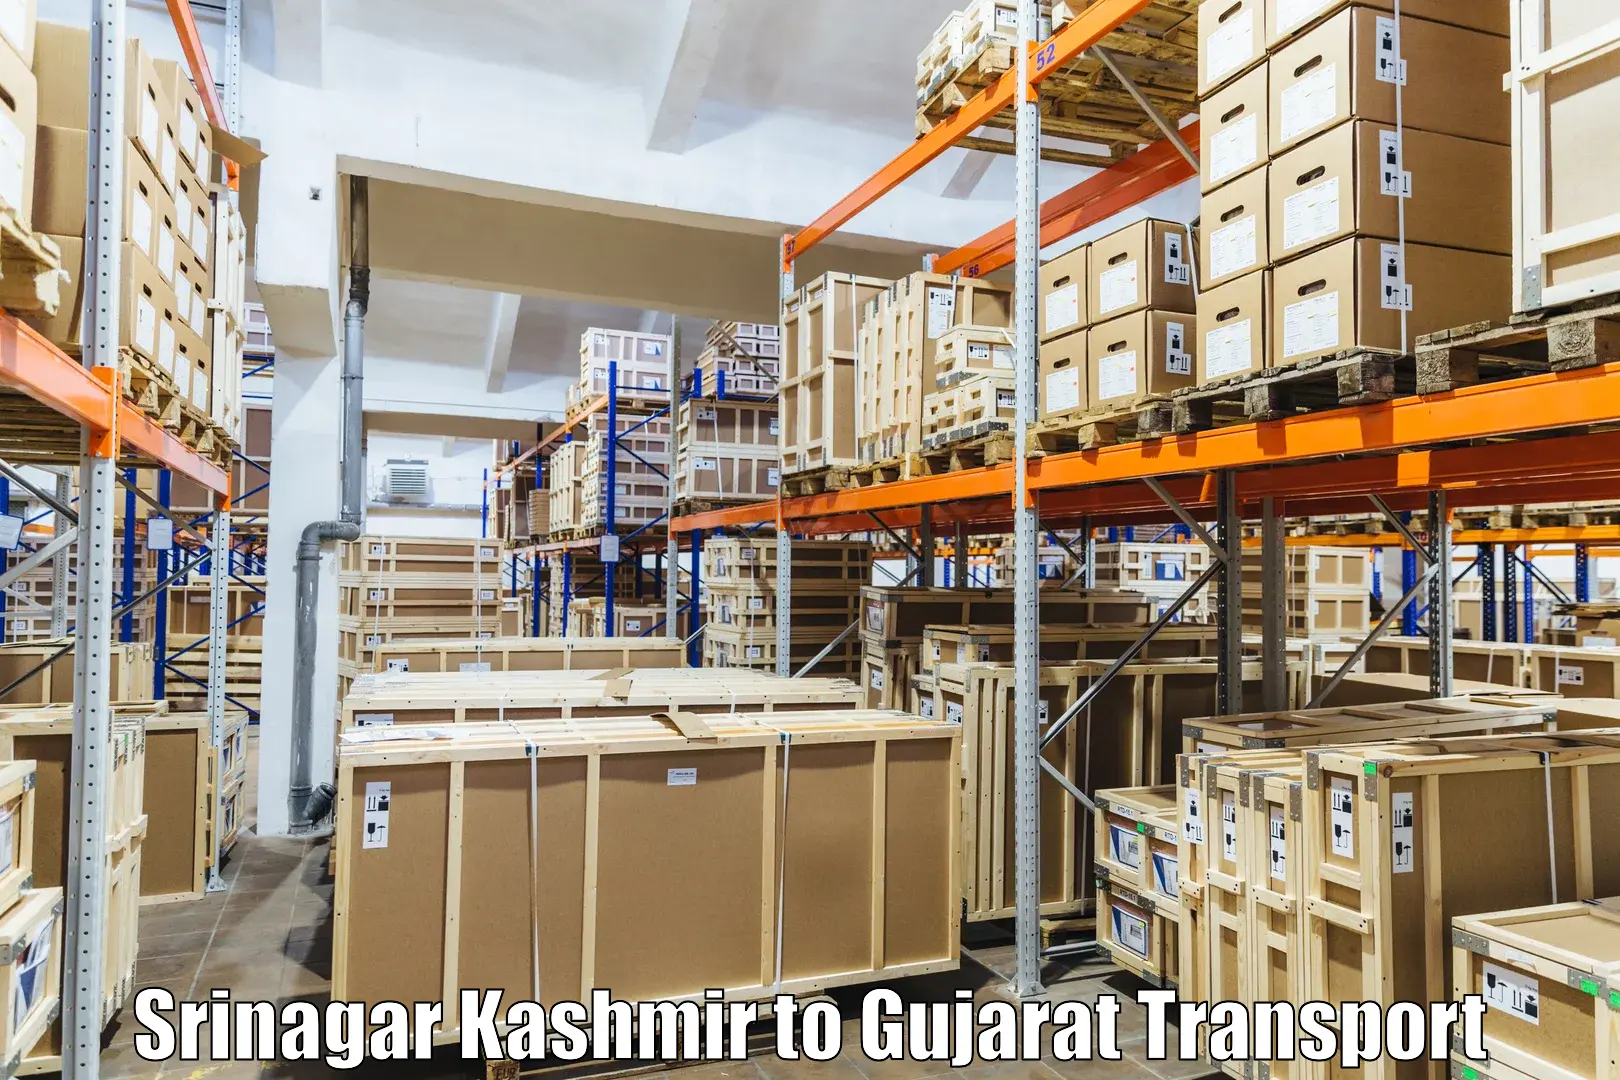 Furniture transport service in Srinagar Kashmir to Veraval